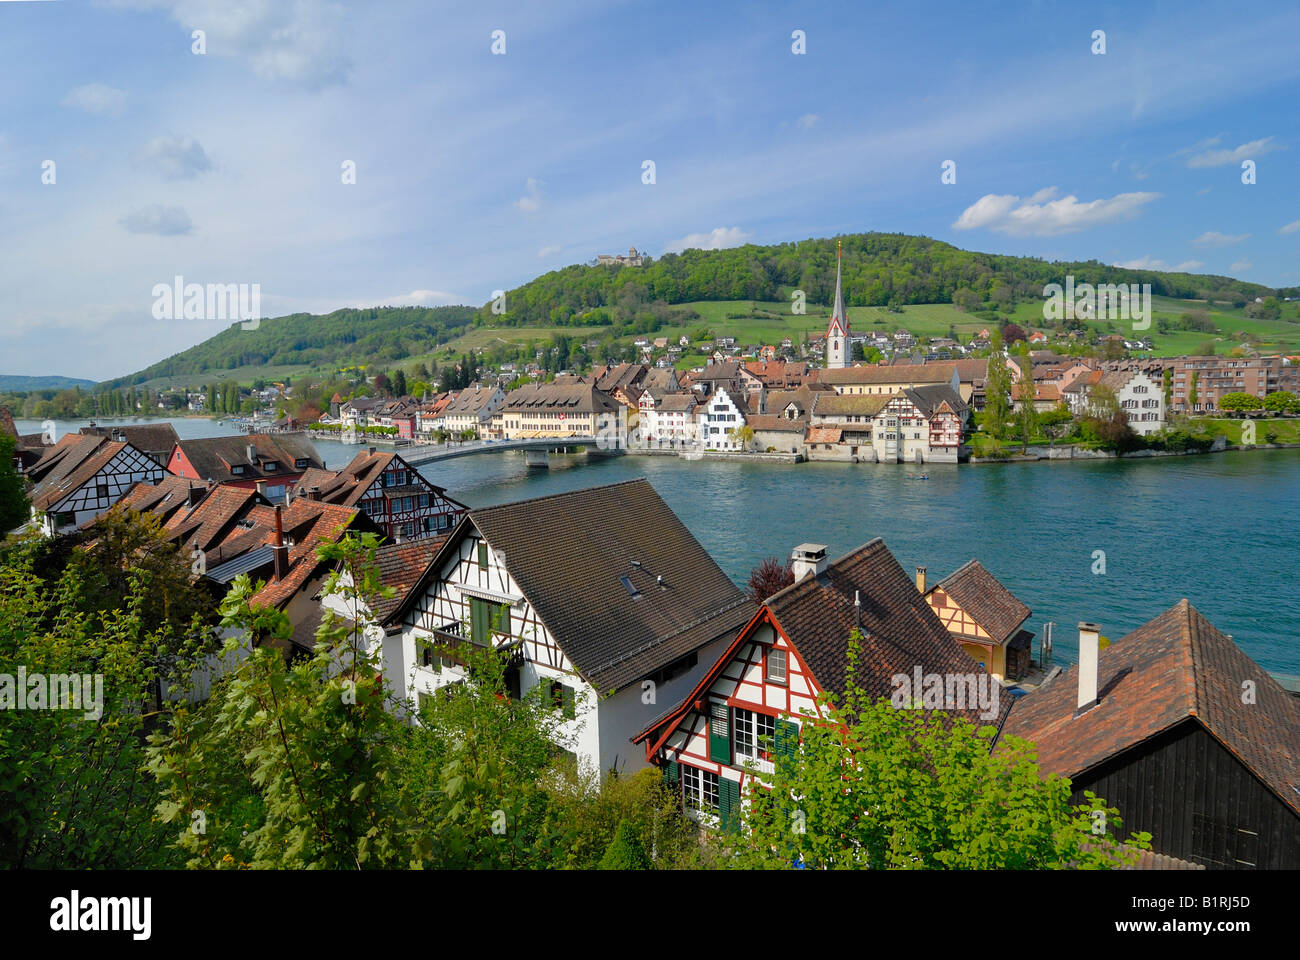 Historic part of town on the bank of the Rhine River, Stein am Rhein, Canton of Schaffhausen, Switzerland, Europe Stock Photo